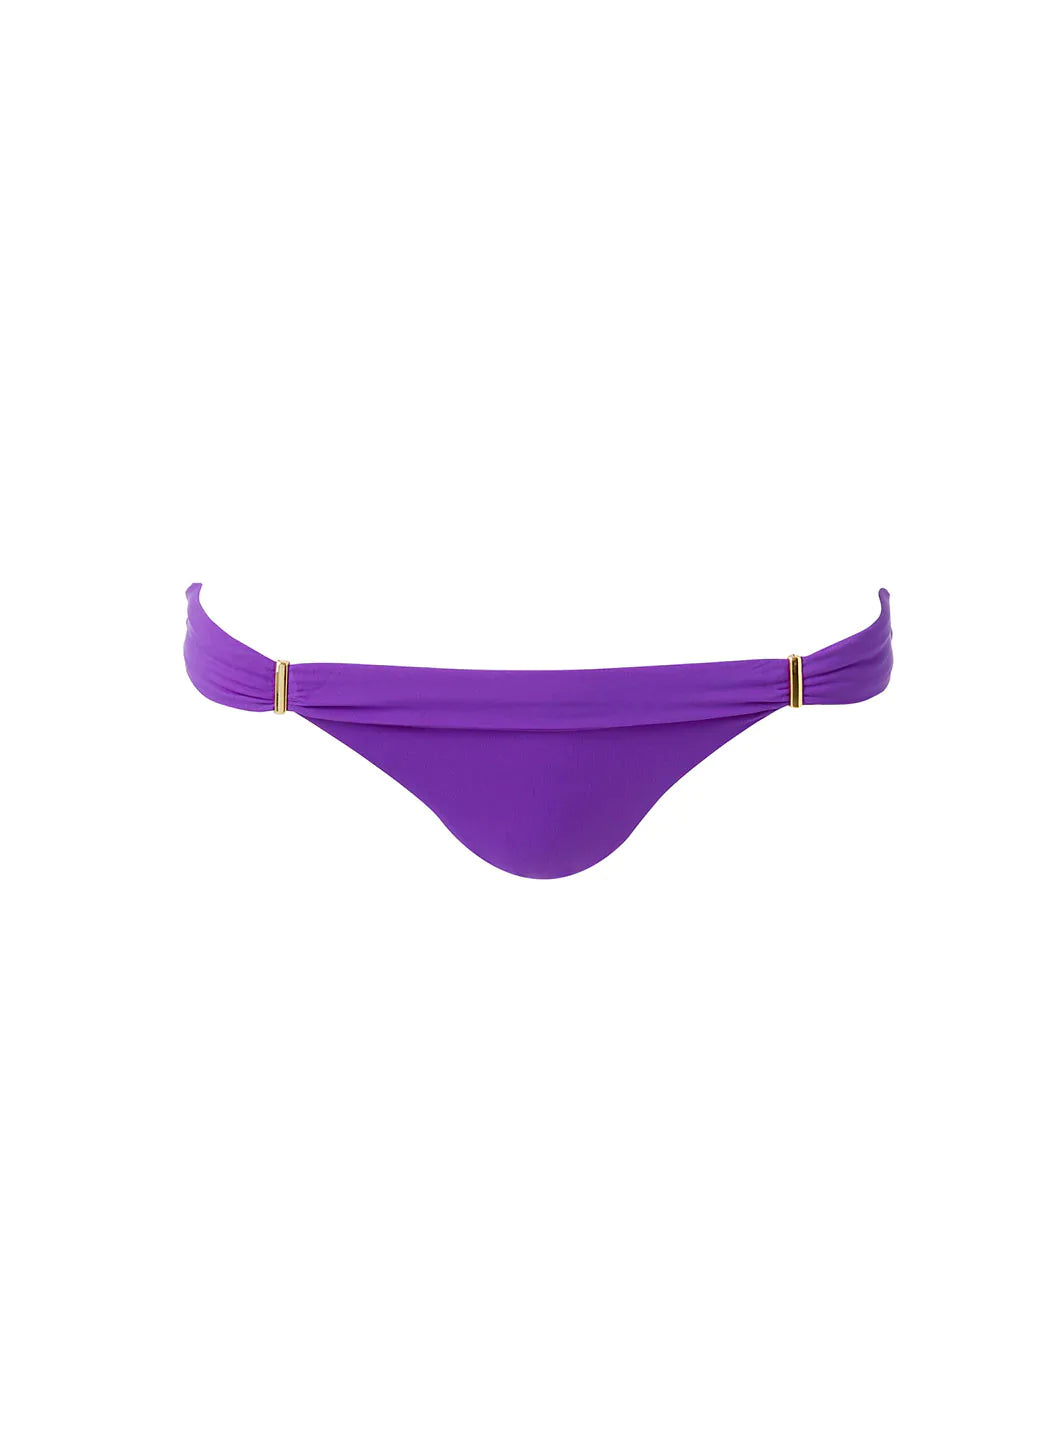 Positano Violet Bikini Bottom